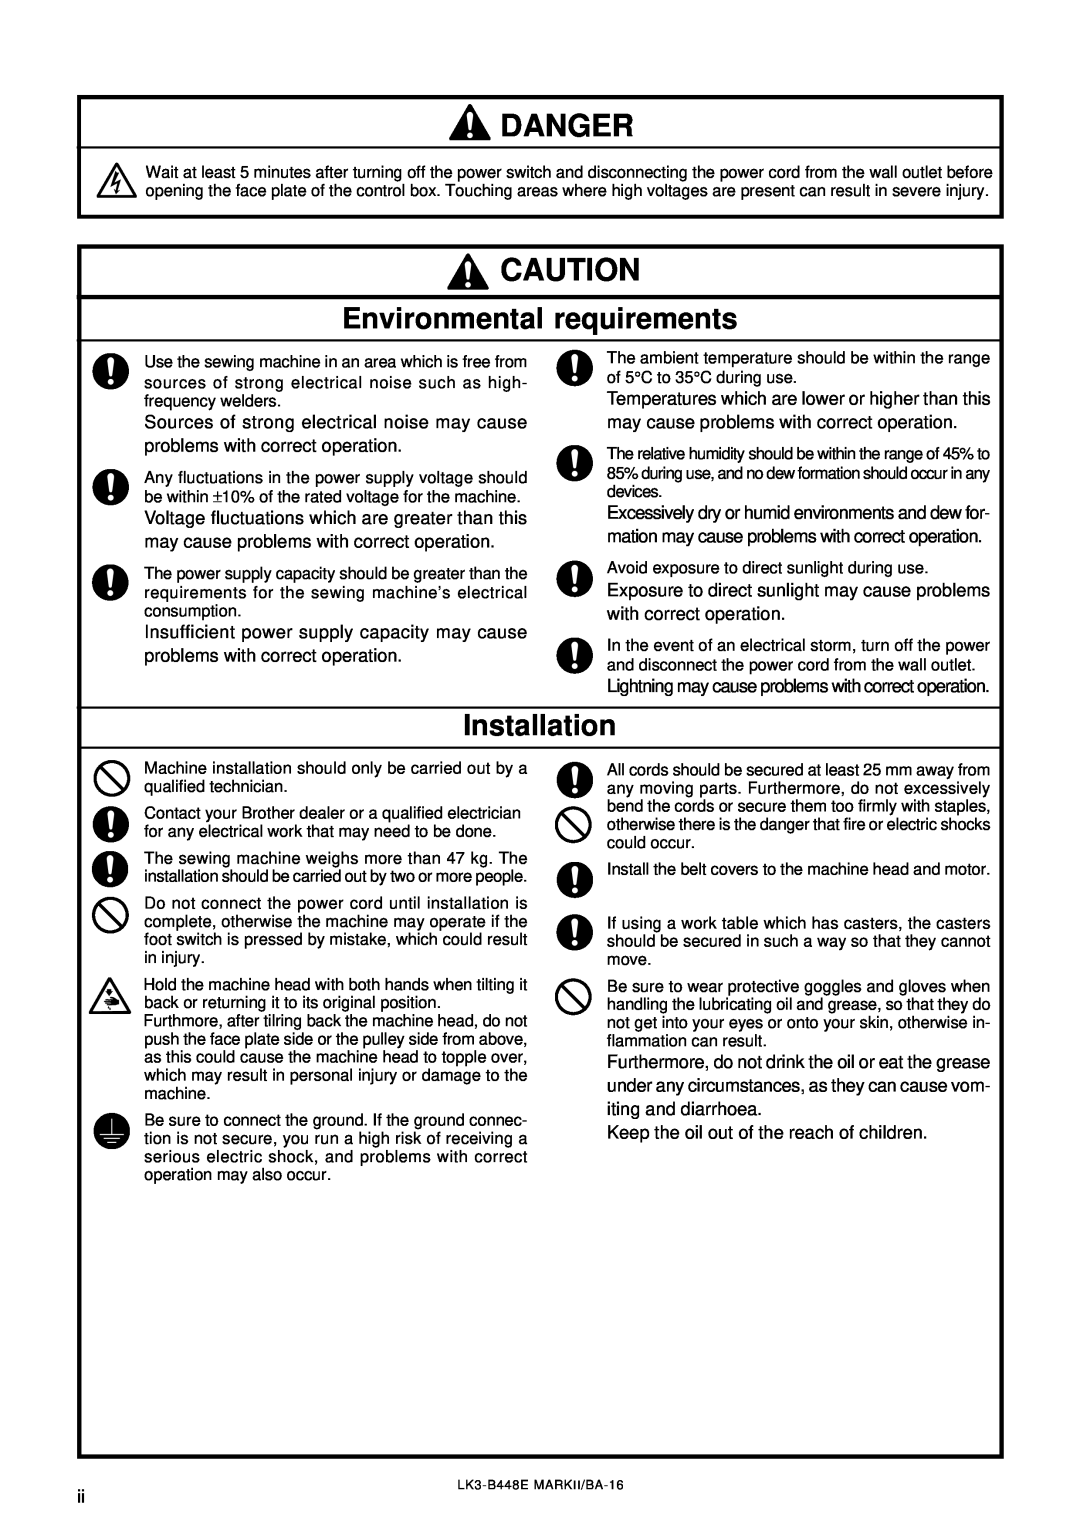 Brother LK3-B448E instruction manual Environmental requirements, Installation, Danger 